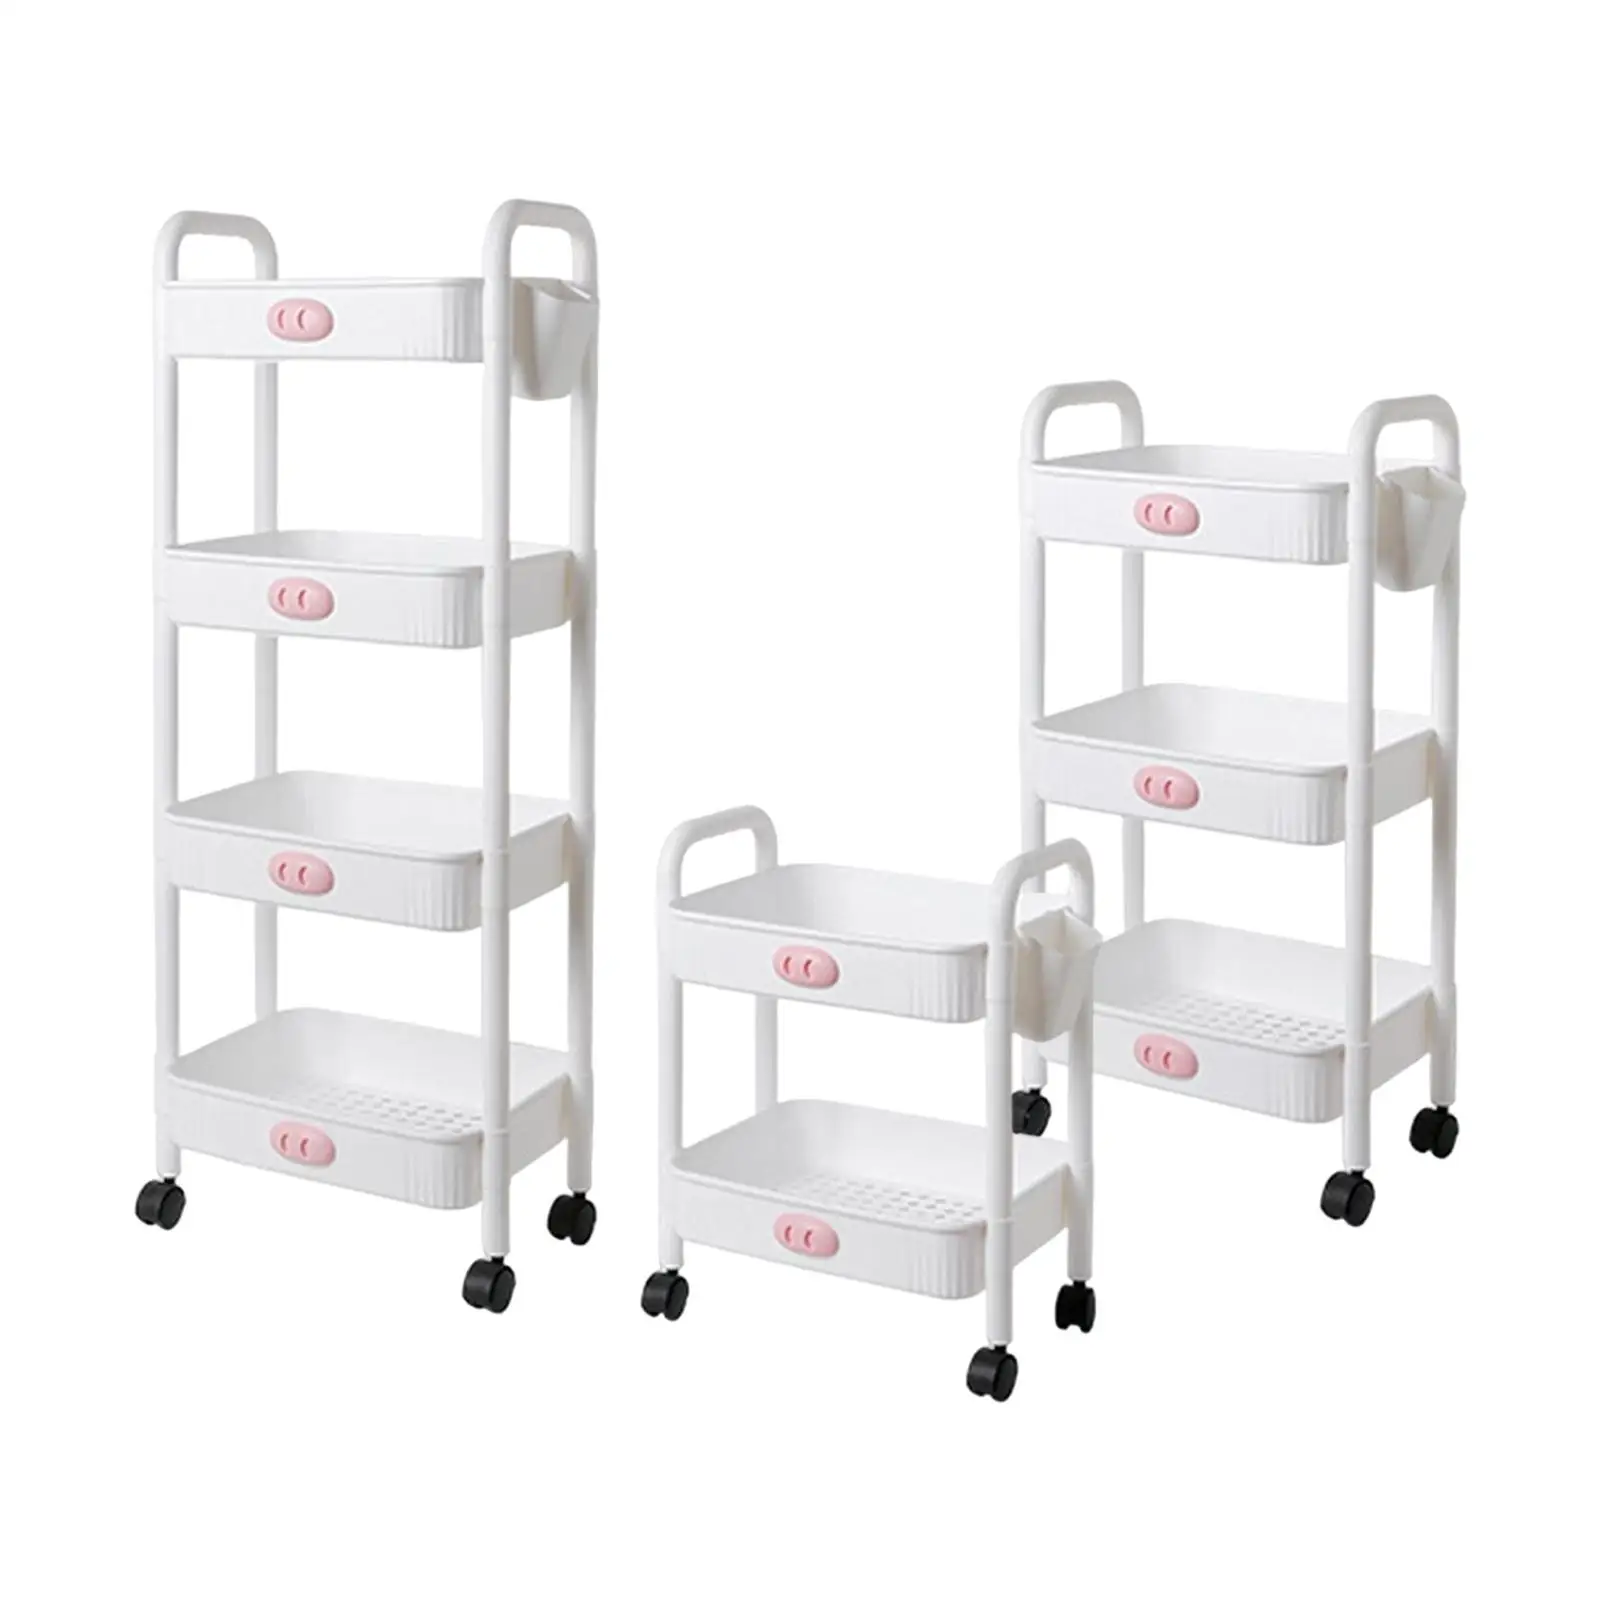 Durable Storage Trolley with Hanging Basket Rack Organizer Rolling Cart for Laundry Bedroom Art Crafts Vegetables Seasonings